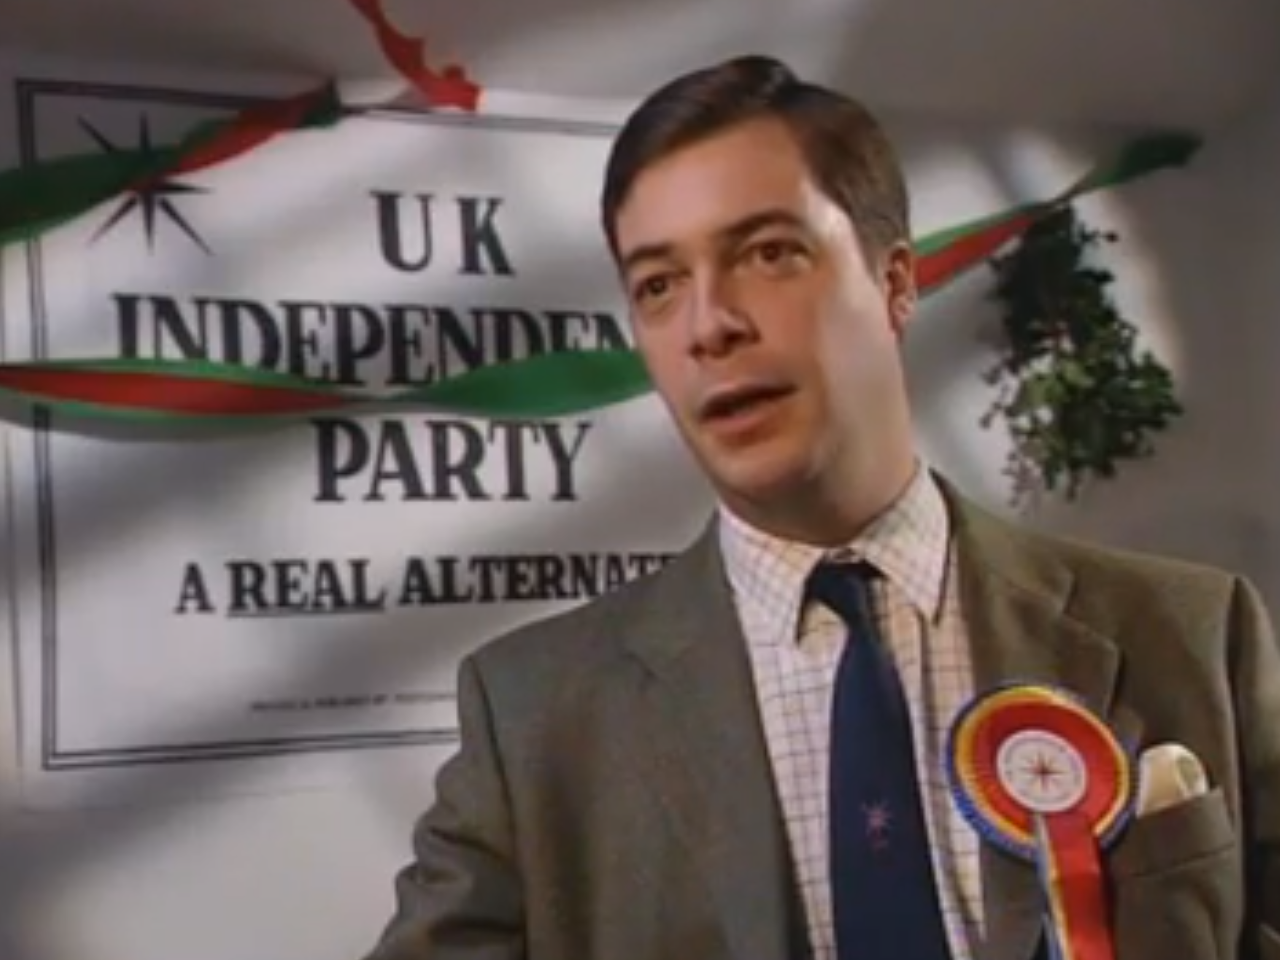 VIDEO: Nigel Farage and UKIP, 17 Years Ago